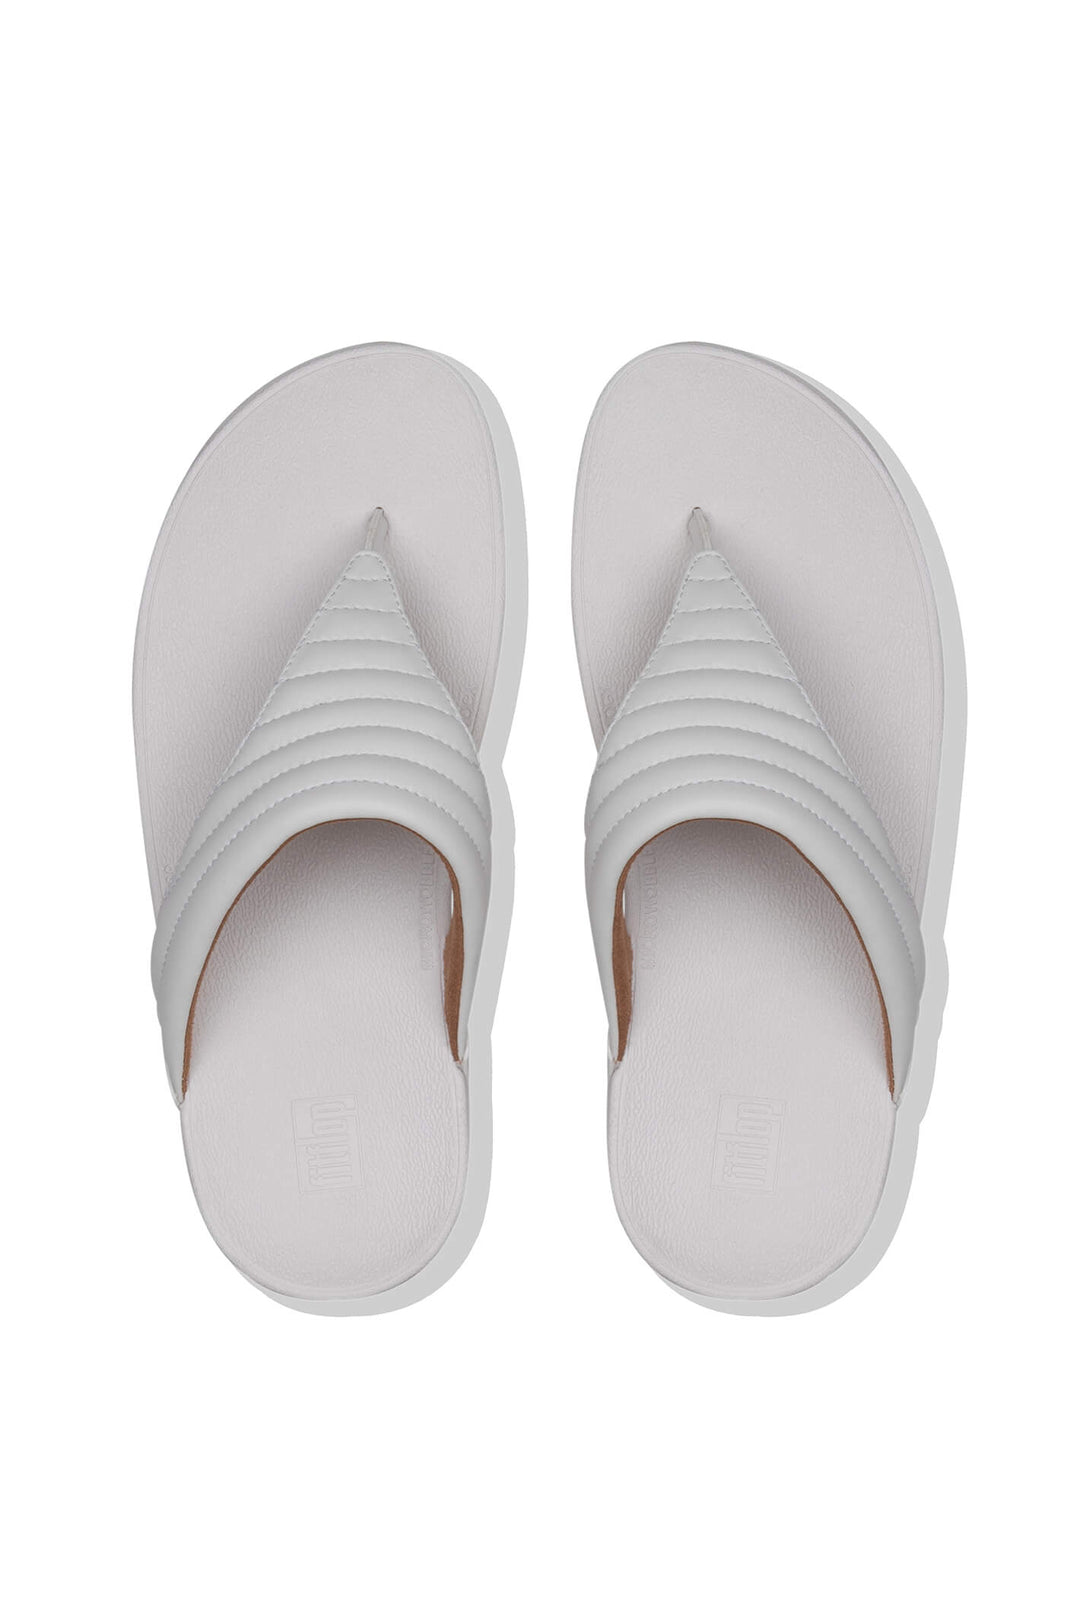 Fitflop Lottie T76-194 Padded Urban White Sandal - Shirley Allum